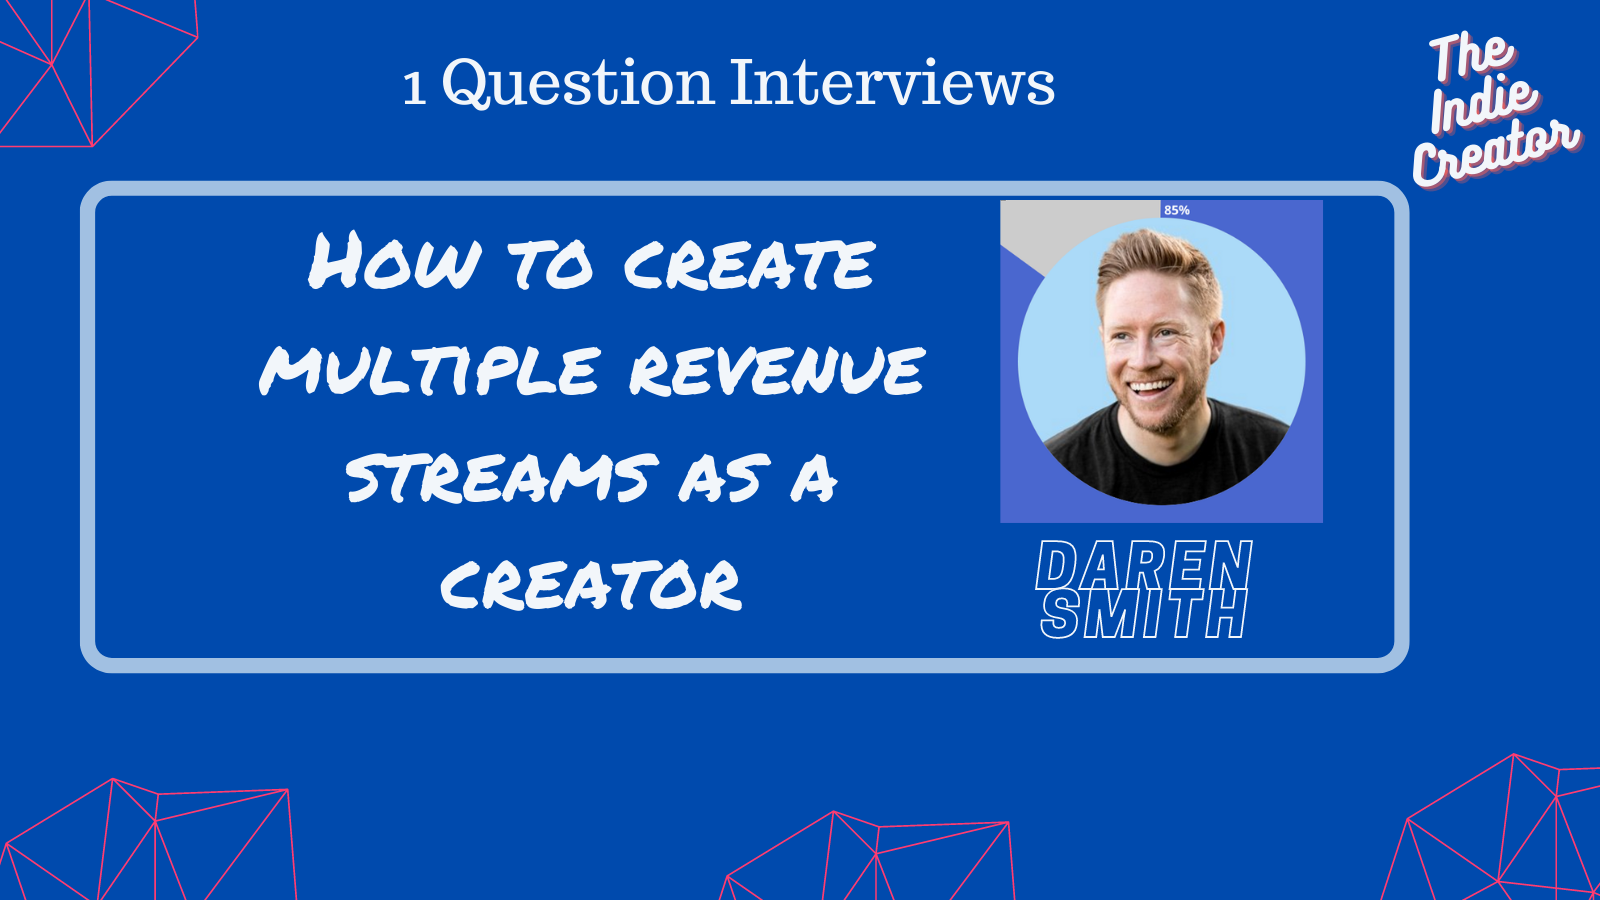 How to create multiple revenue streams as a creator